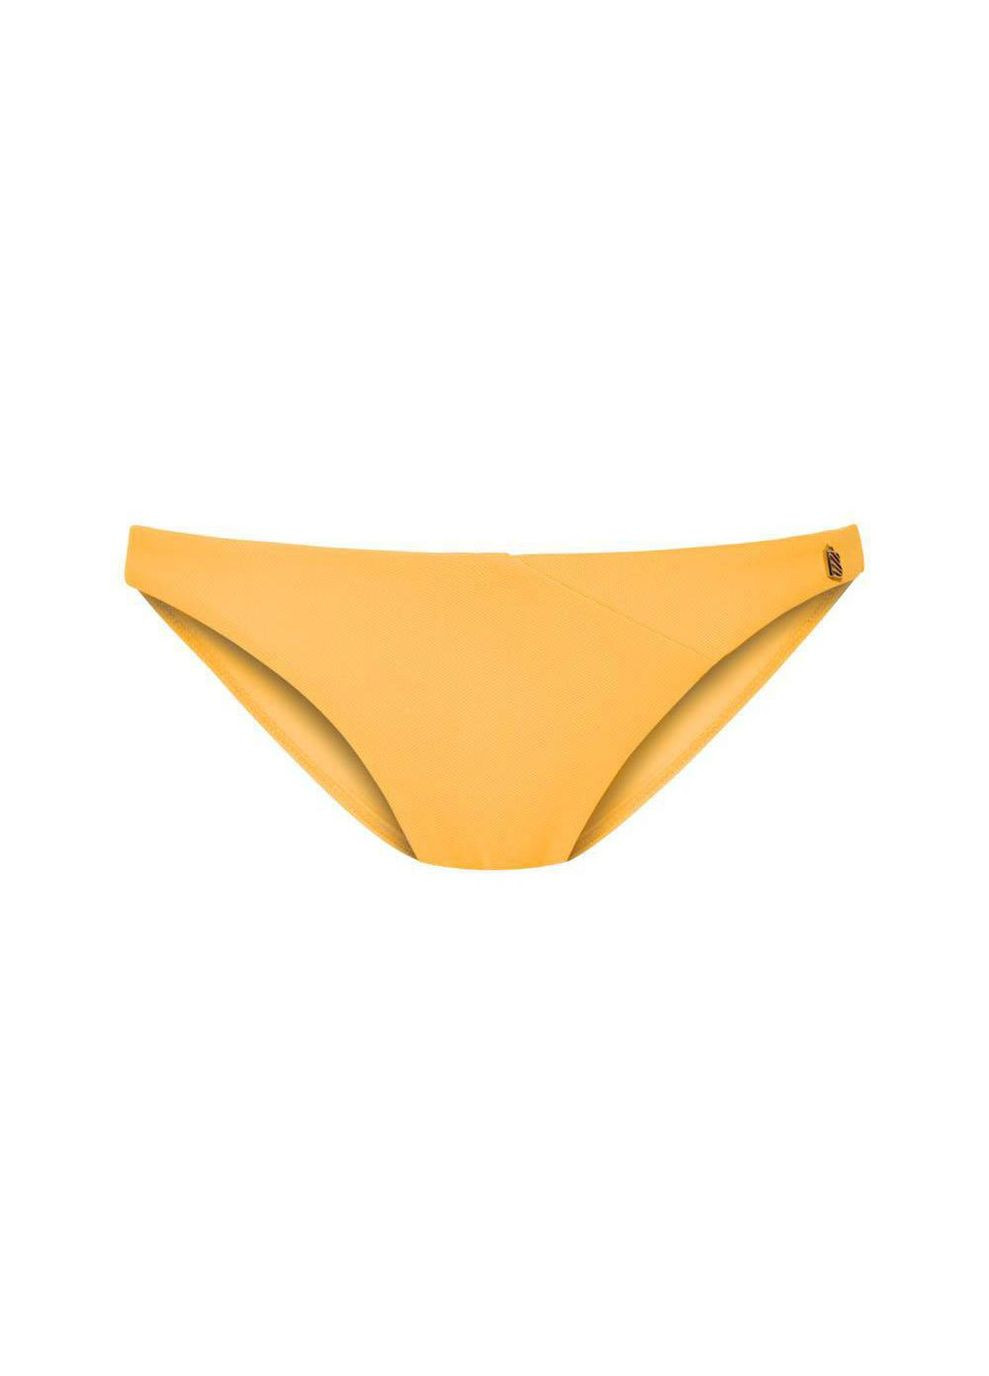 Желтые трусы купальные женские 36/xs желтый 070207-160 Beachlife